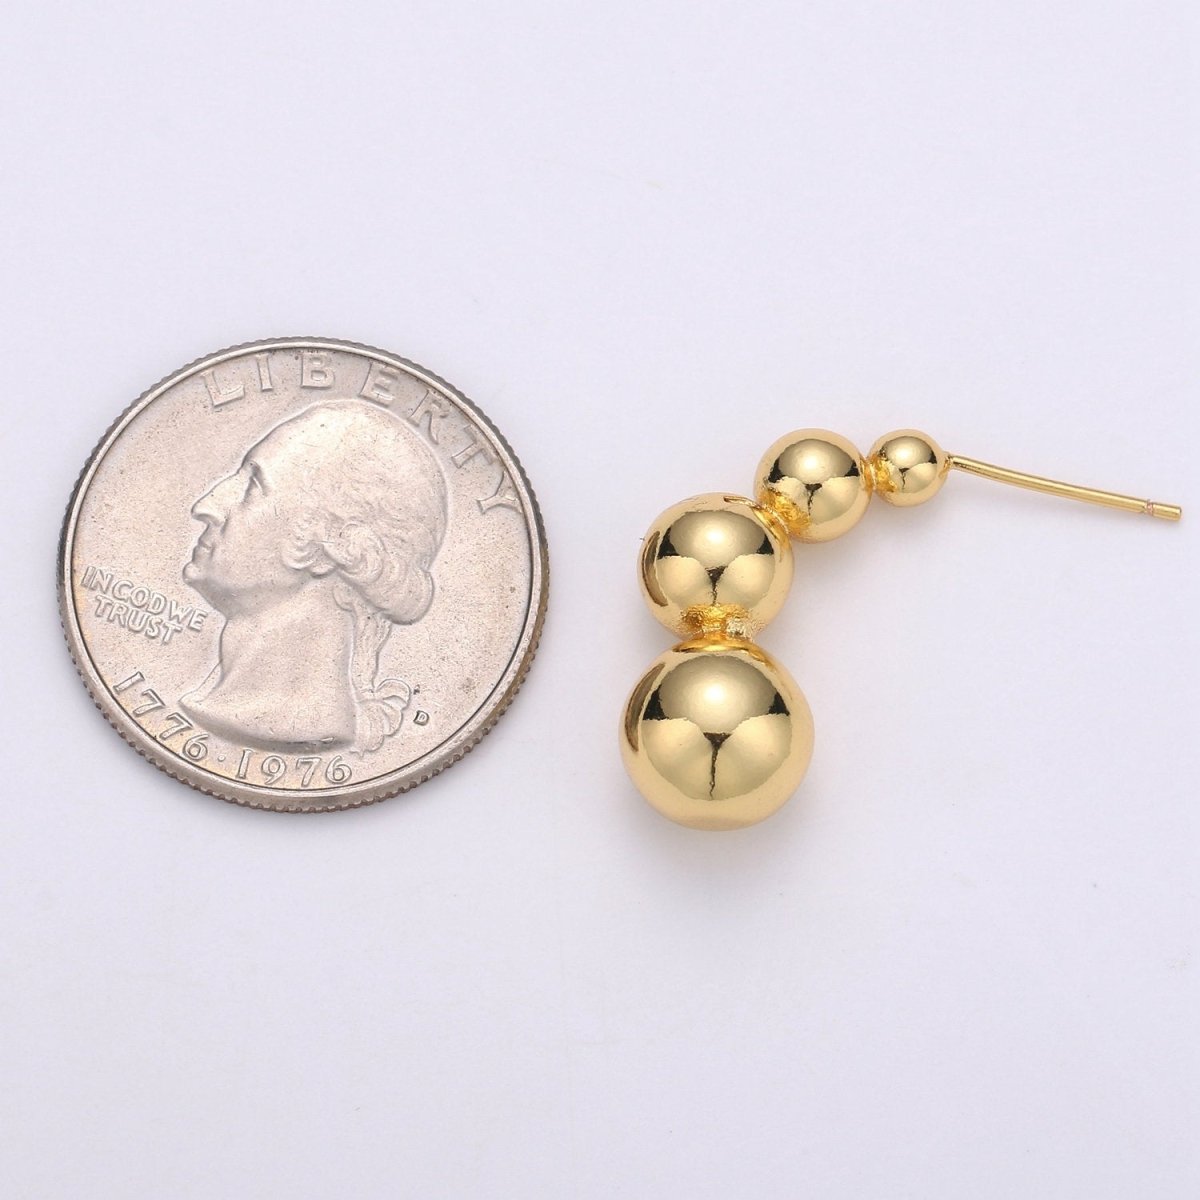 Gold Ball earrings, Geometric stud earrings, Bold earrings, Statement earrings, Dangle studs, gold earrings, minimalist earring Q-202 - DLUXCA